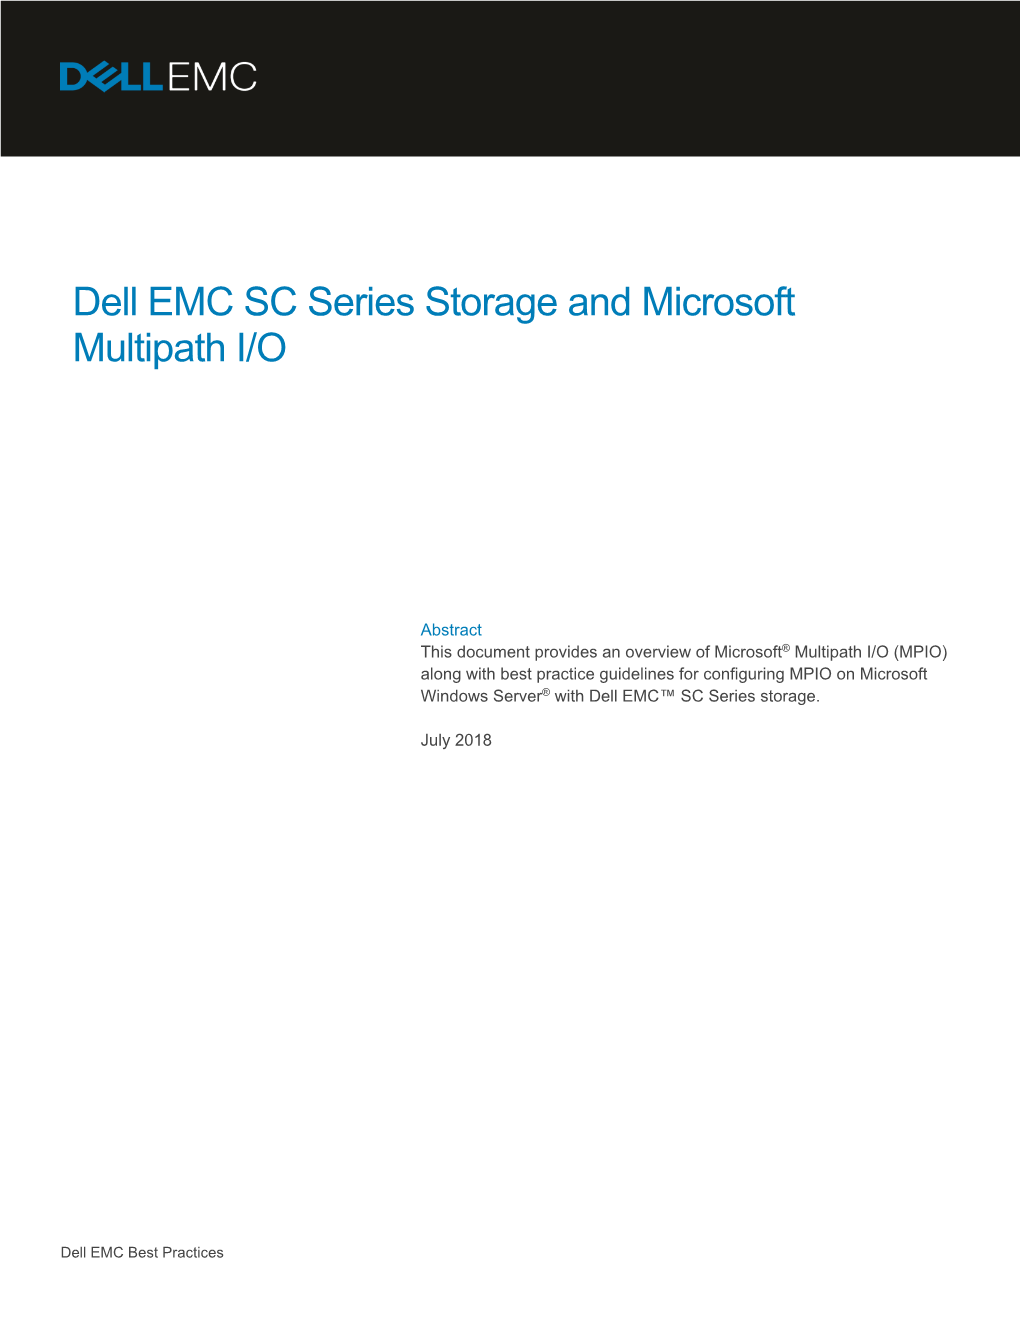 Dell EMC SC Series Storage and Microsoft Multipath I/O